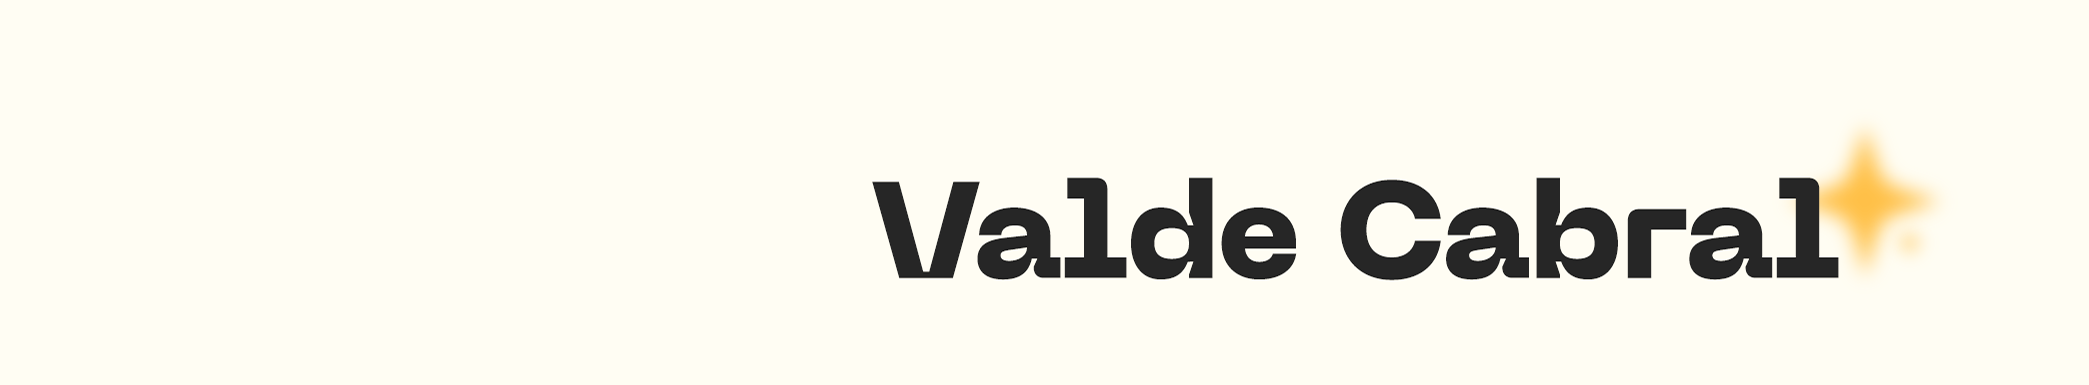 Valde Cabral's profile banner